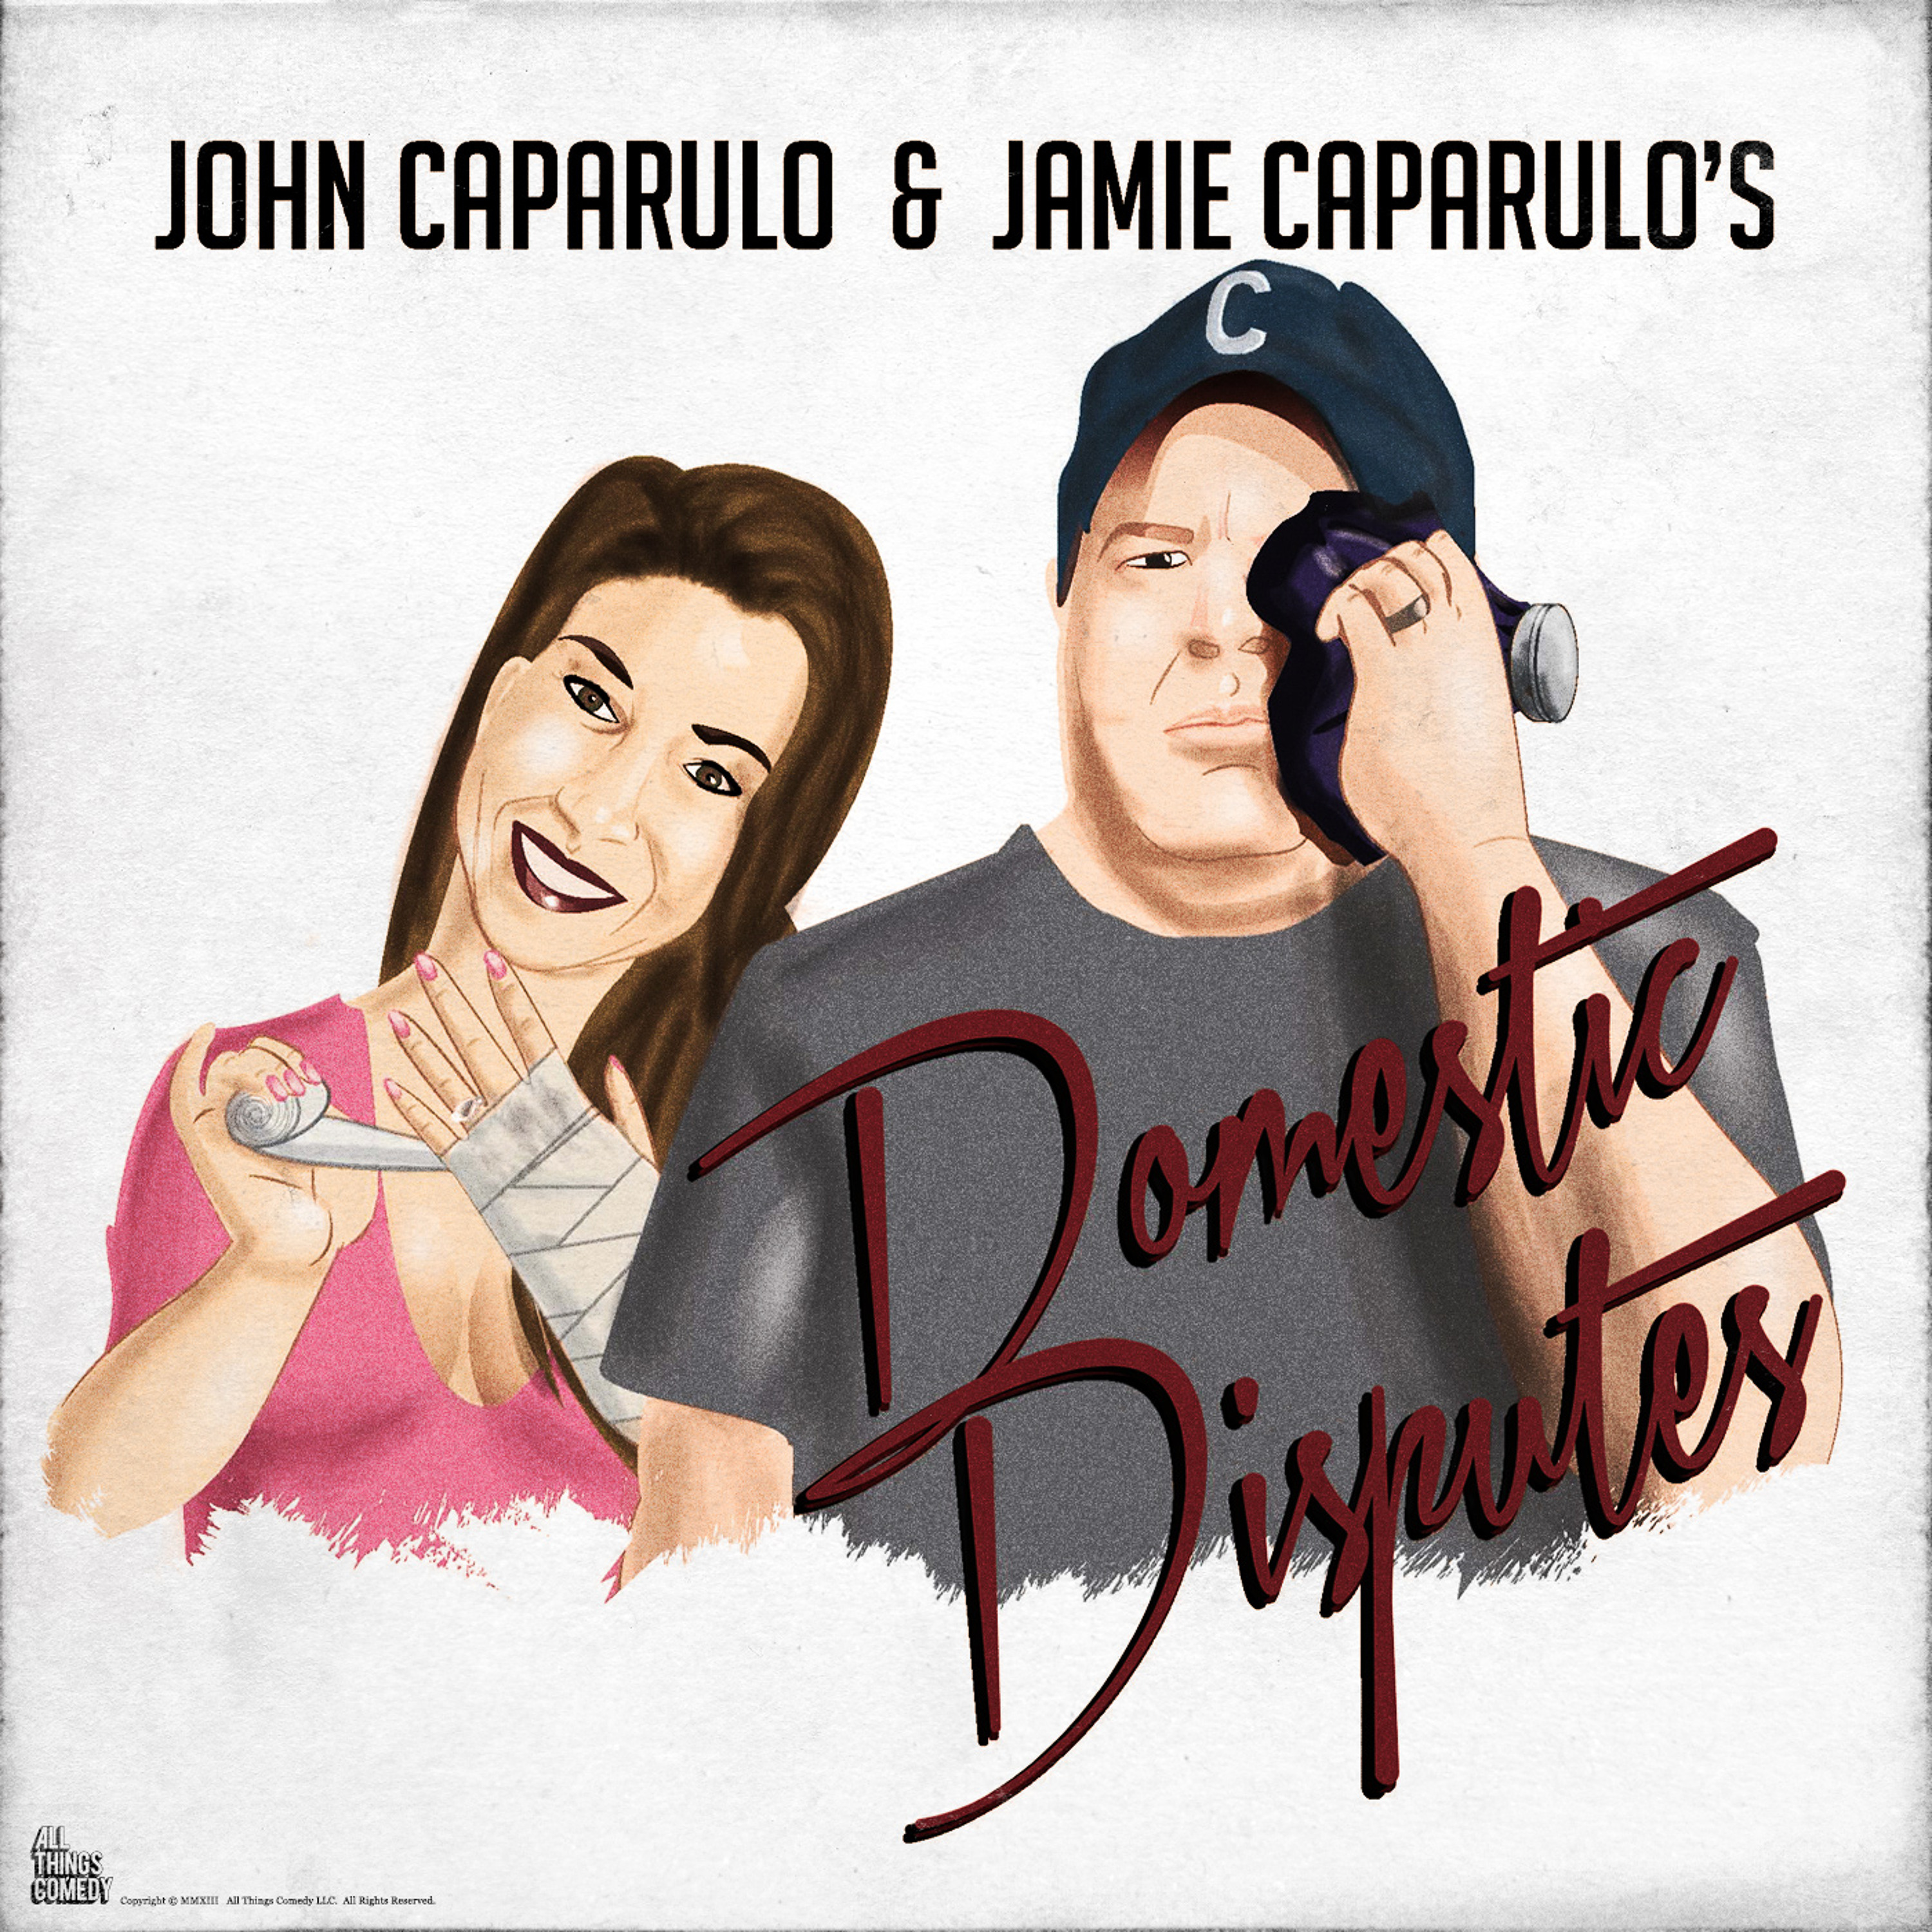 JOHN CAPARULO & JAMIE CAPARULO'S DOMESTIC DISPUTES BONUS - SUPER BOWL XLIX